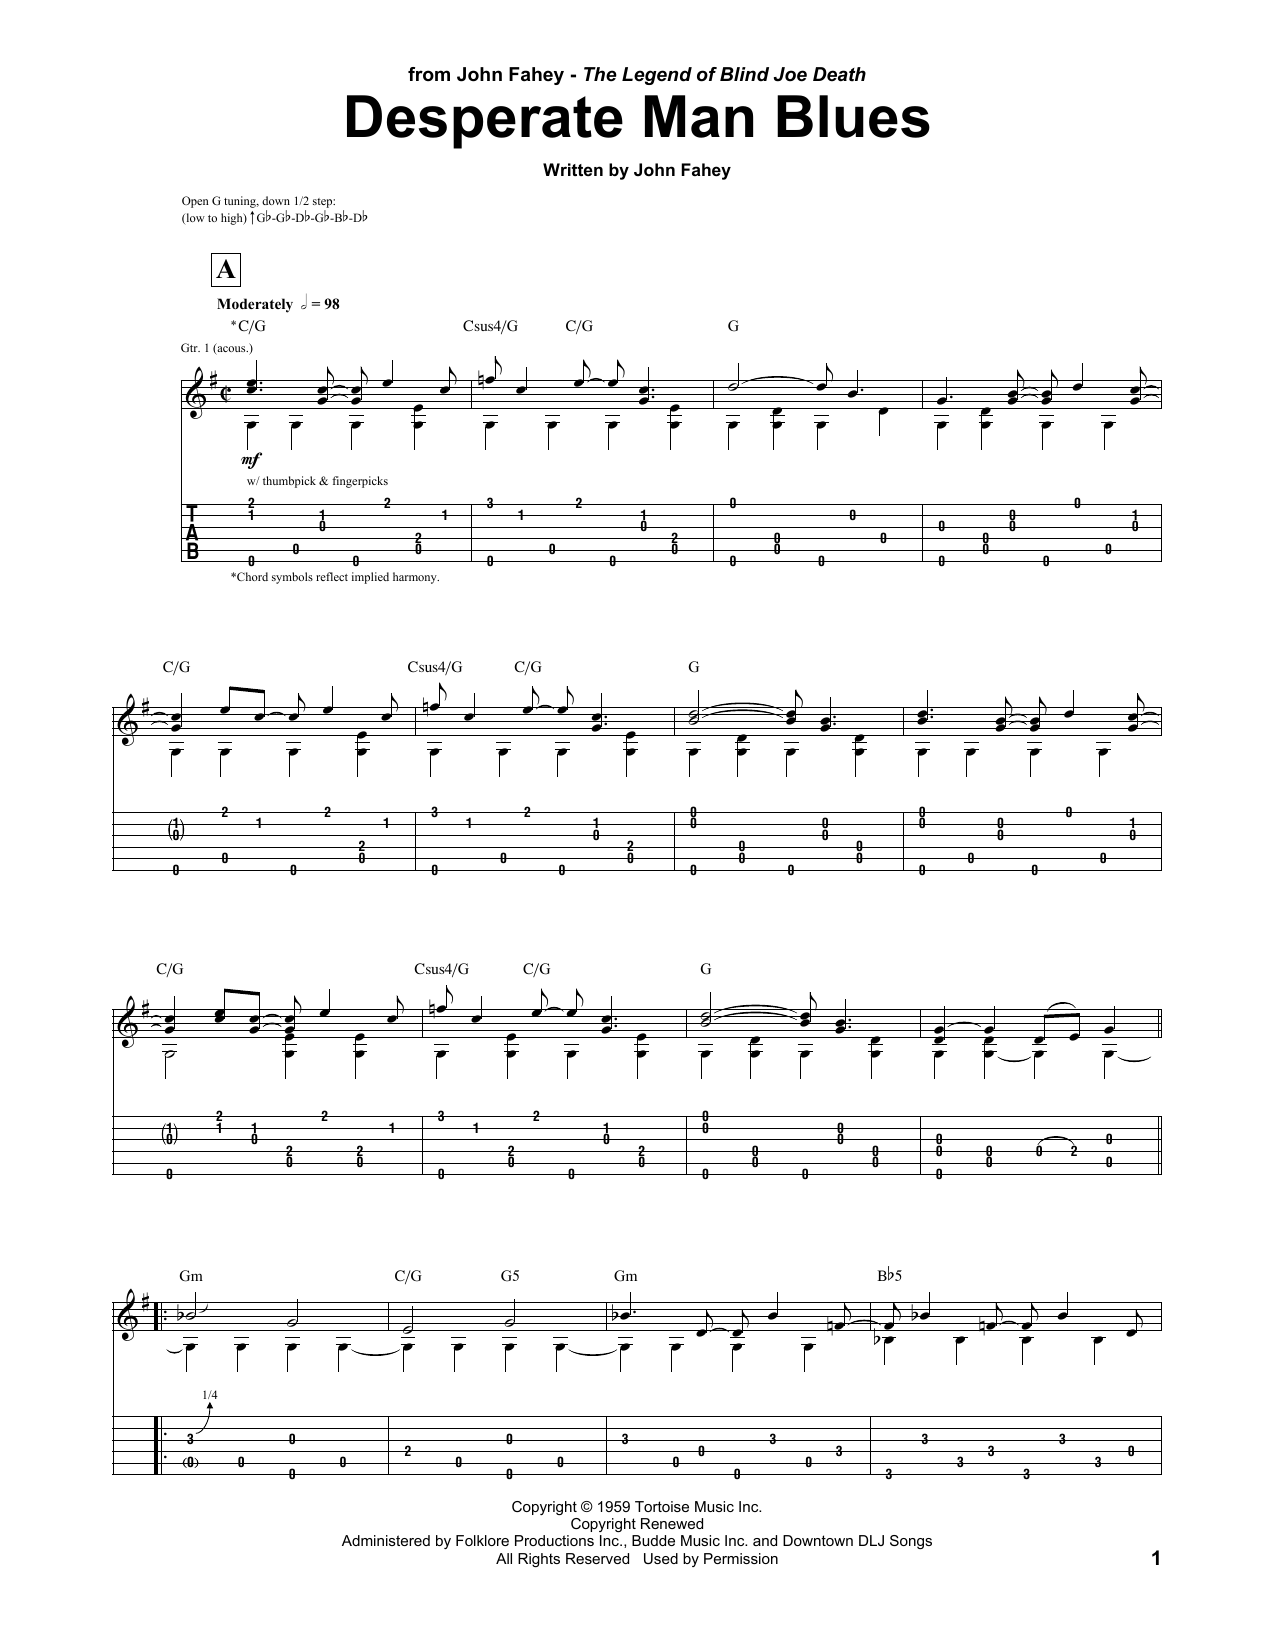 John Fahey Desperate Man Blues Sheet Music Notes & Chords for Guitar Tab - Download or Print PDF